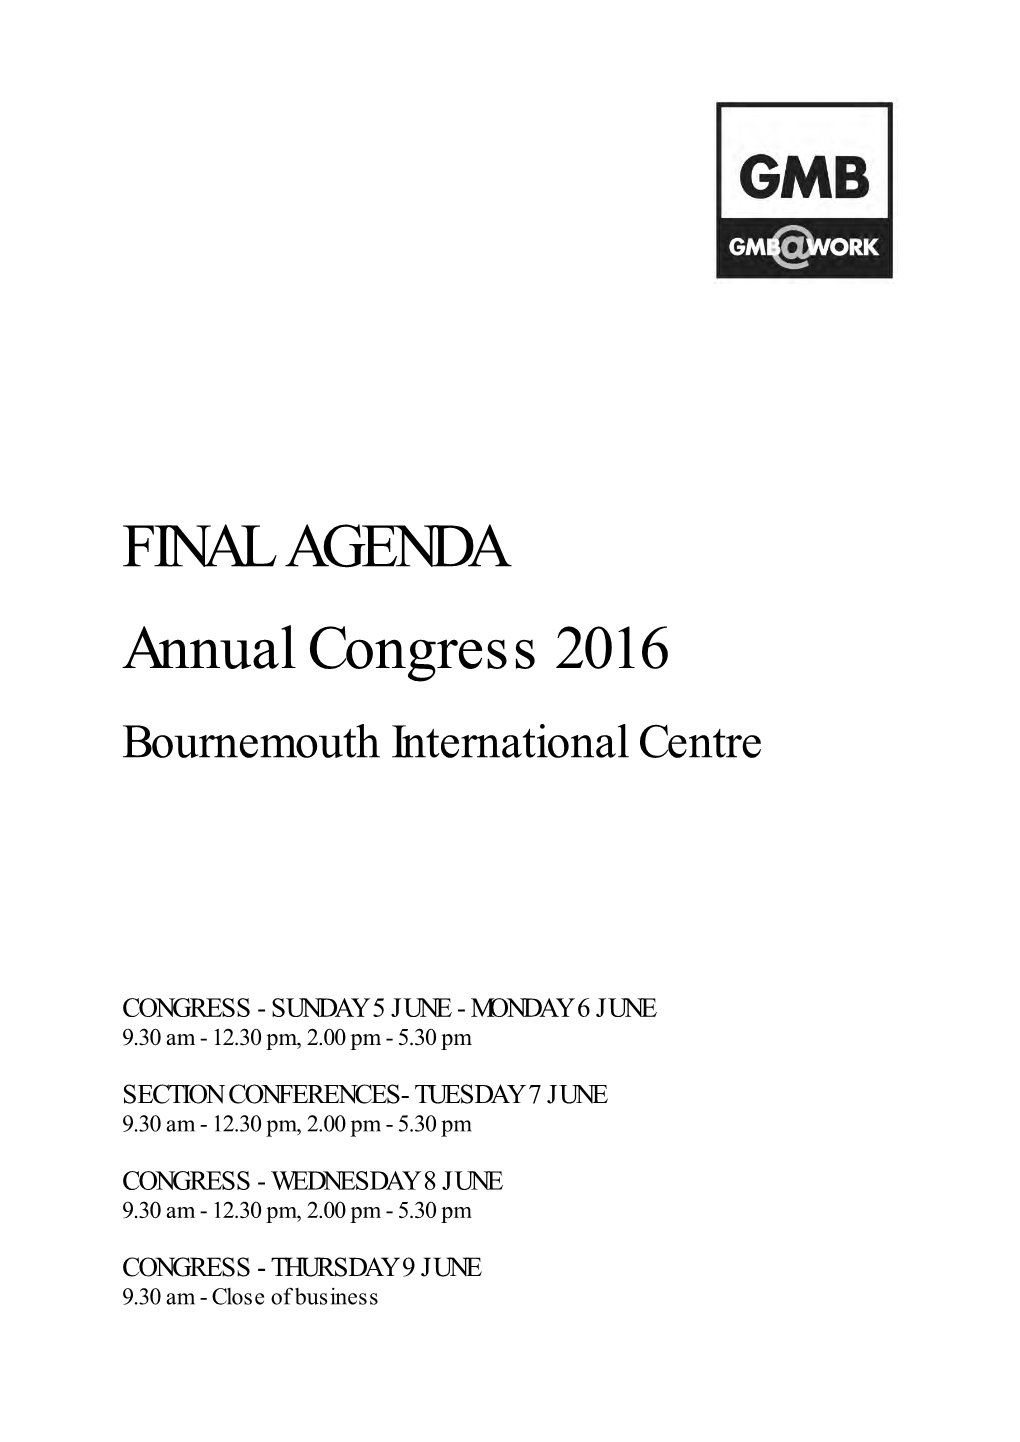 FINAL AGENDA Annual Congress 2016 Bournemouth International Centre